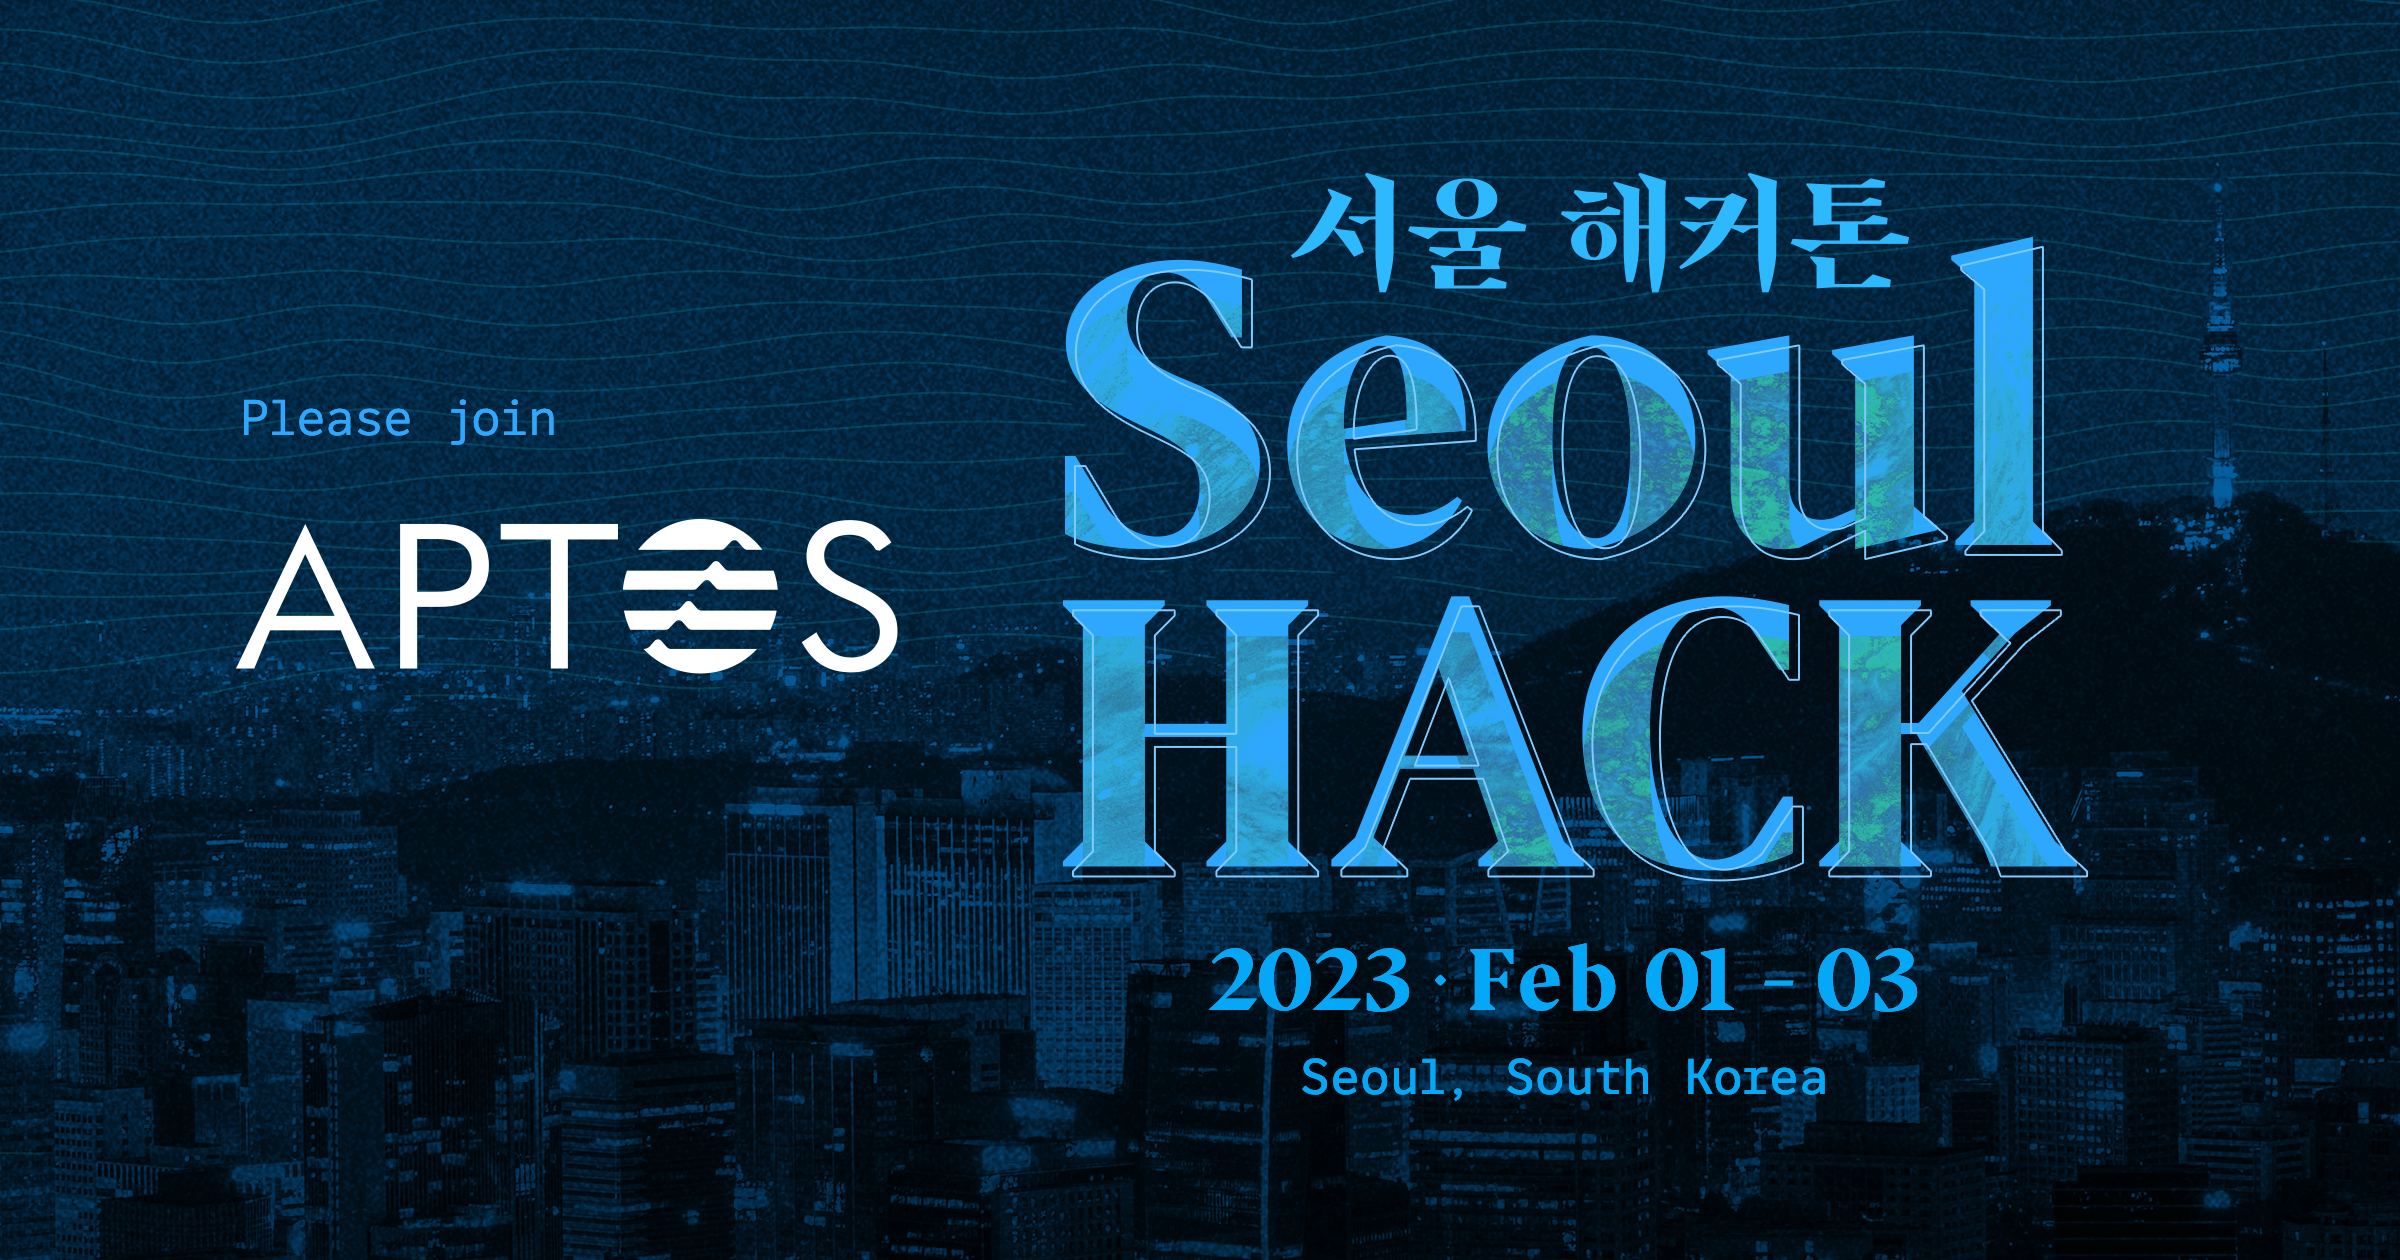 Please join Aptos for Seoul Hack 2023 poster artwork